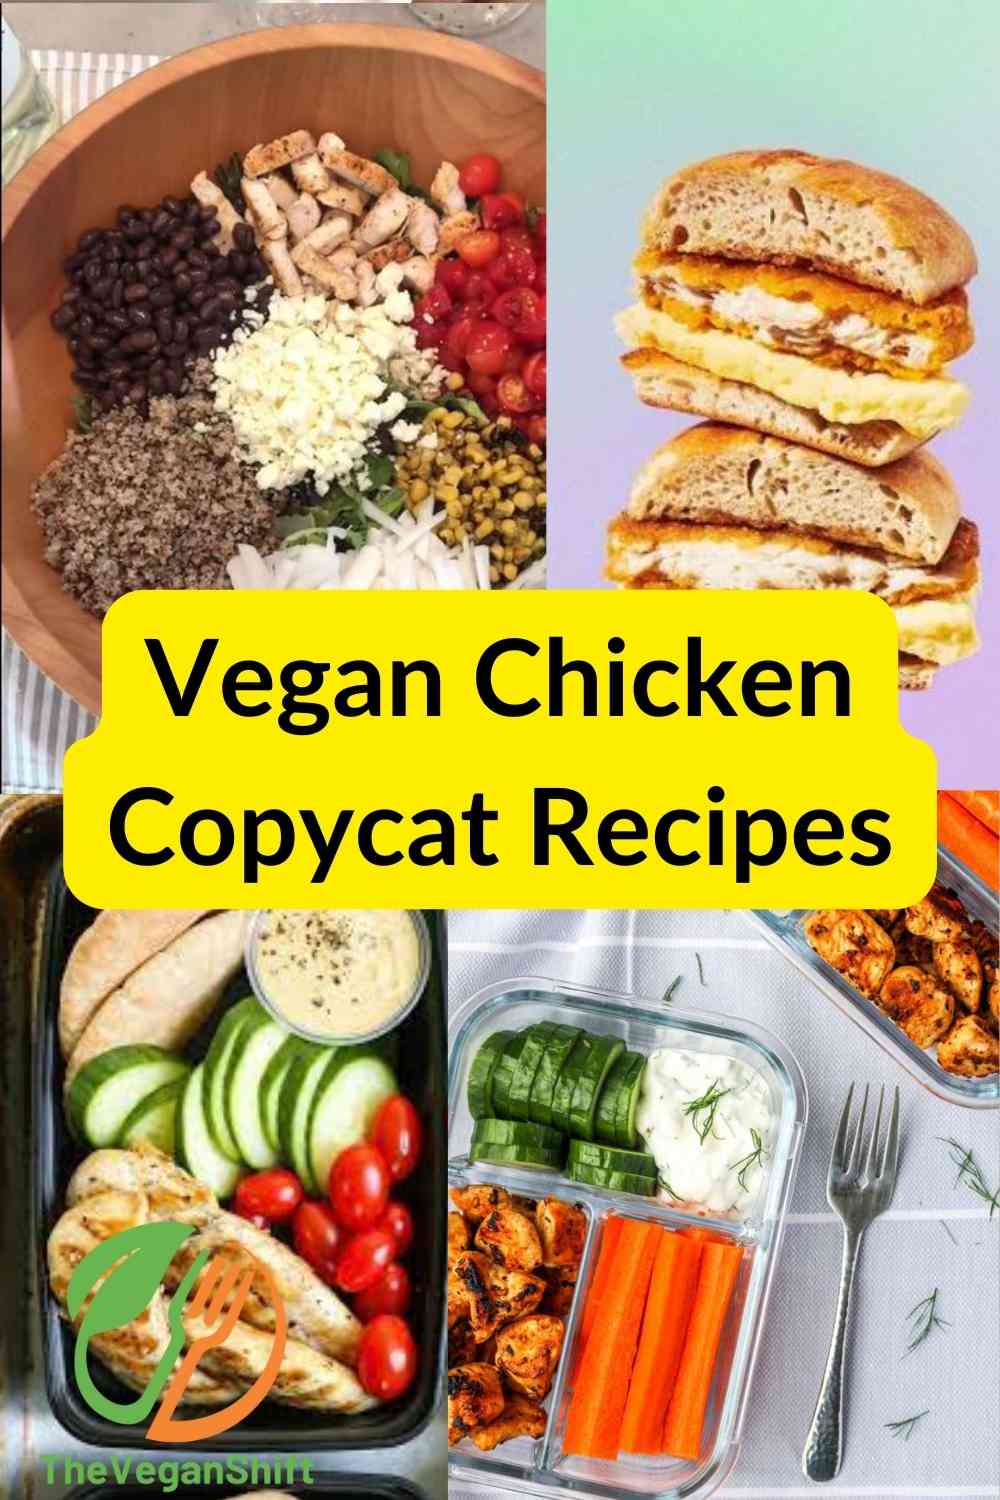 Vegan Chicken copycat recipes